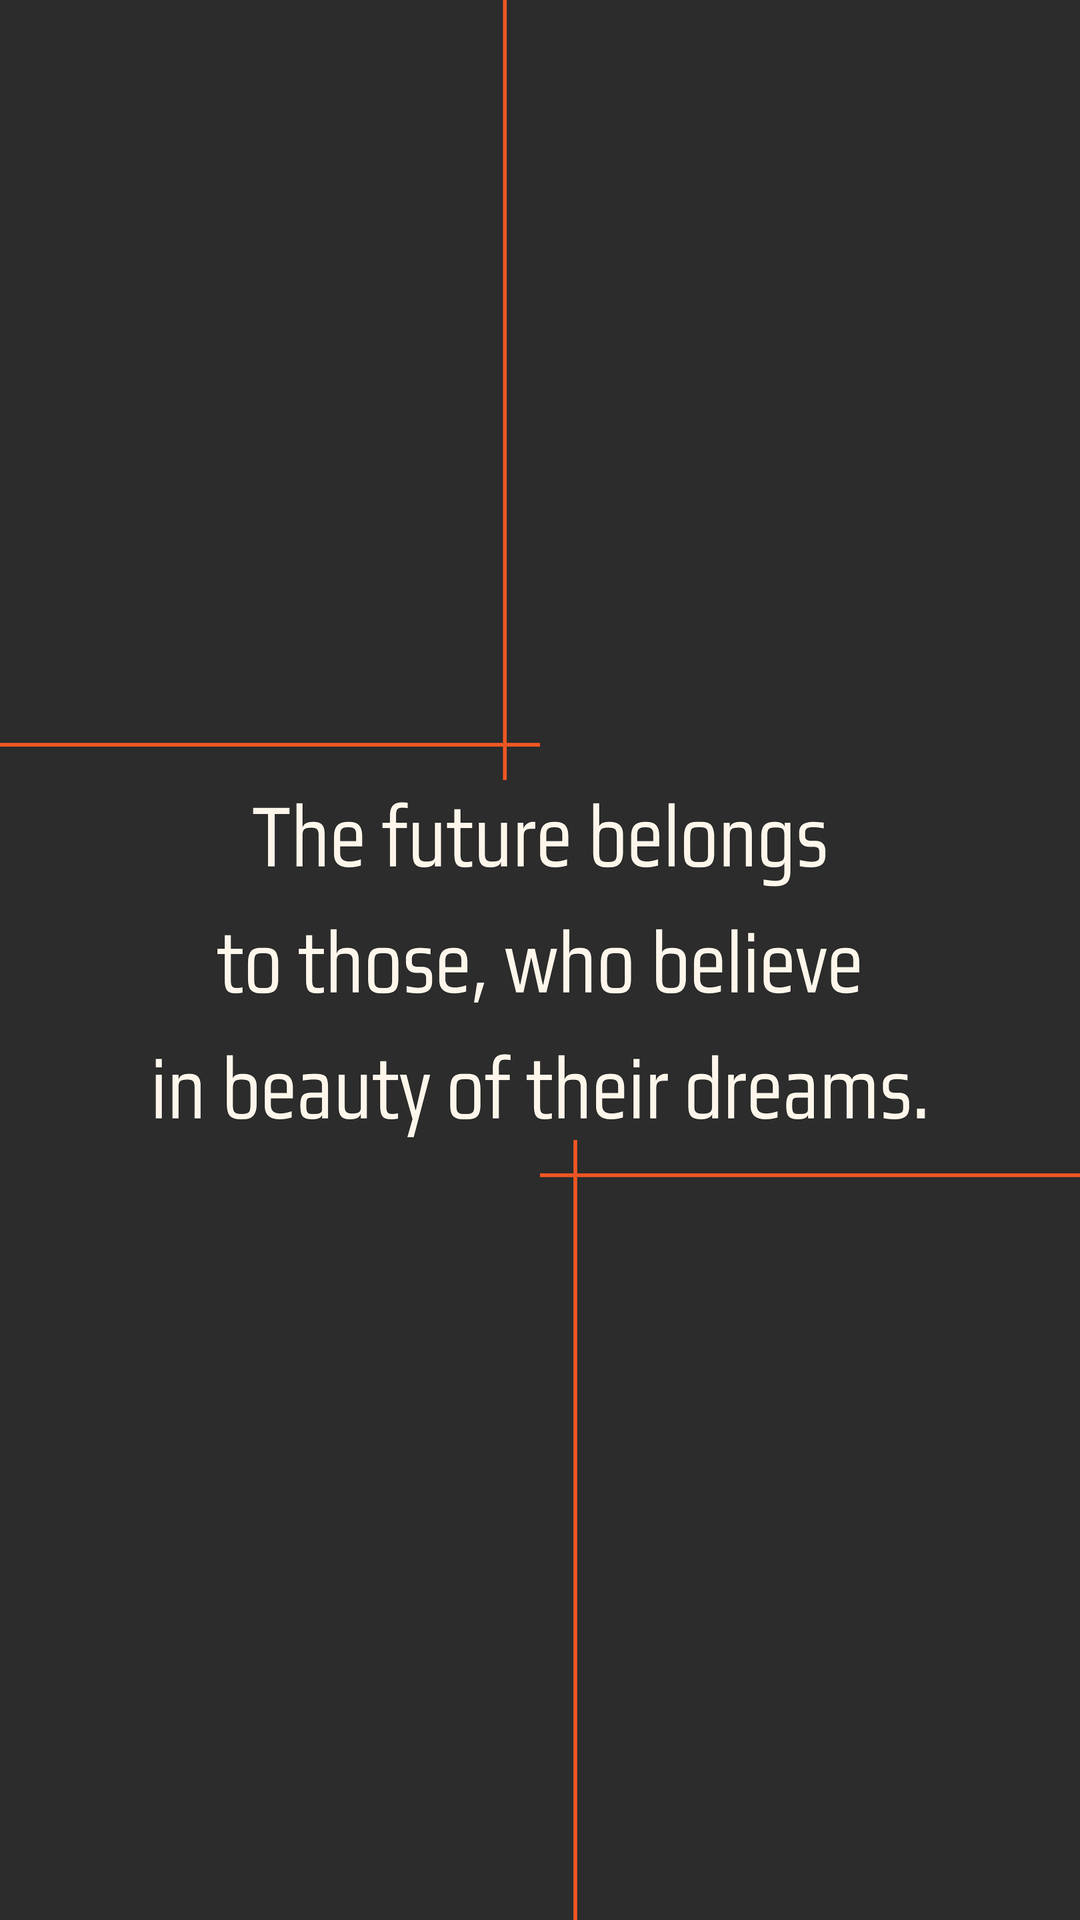 Believe in Your Dreams Wallpaper